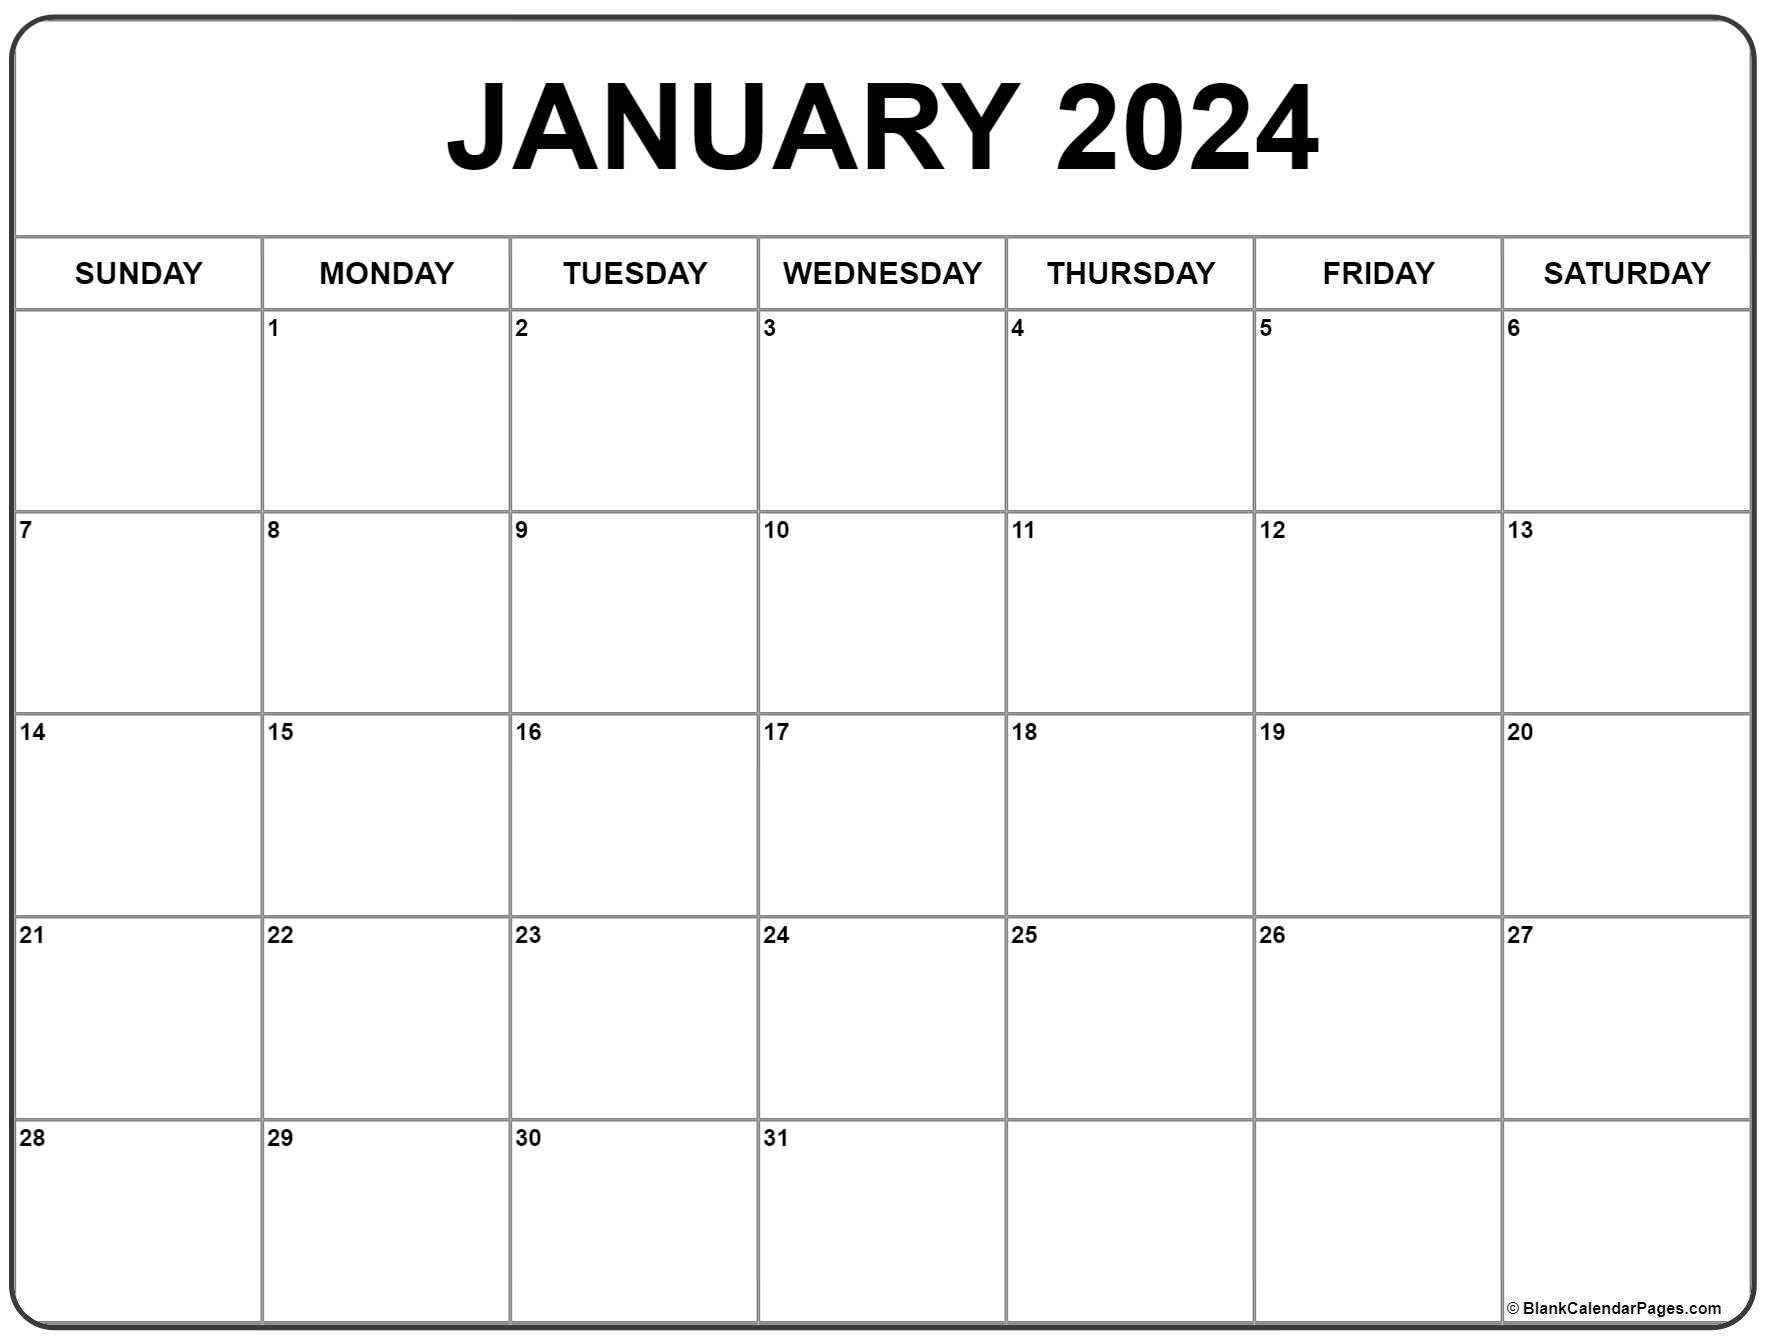 January 2024 Calendar | Free Printable Calendar | Free Printable Calendar January 2024 Pdf